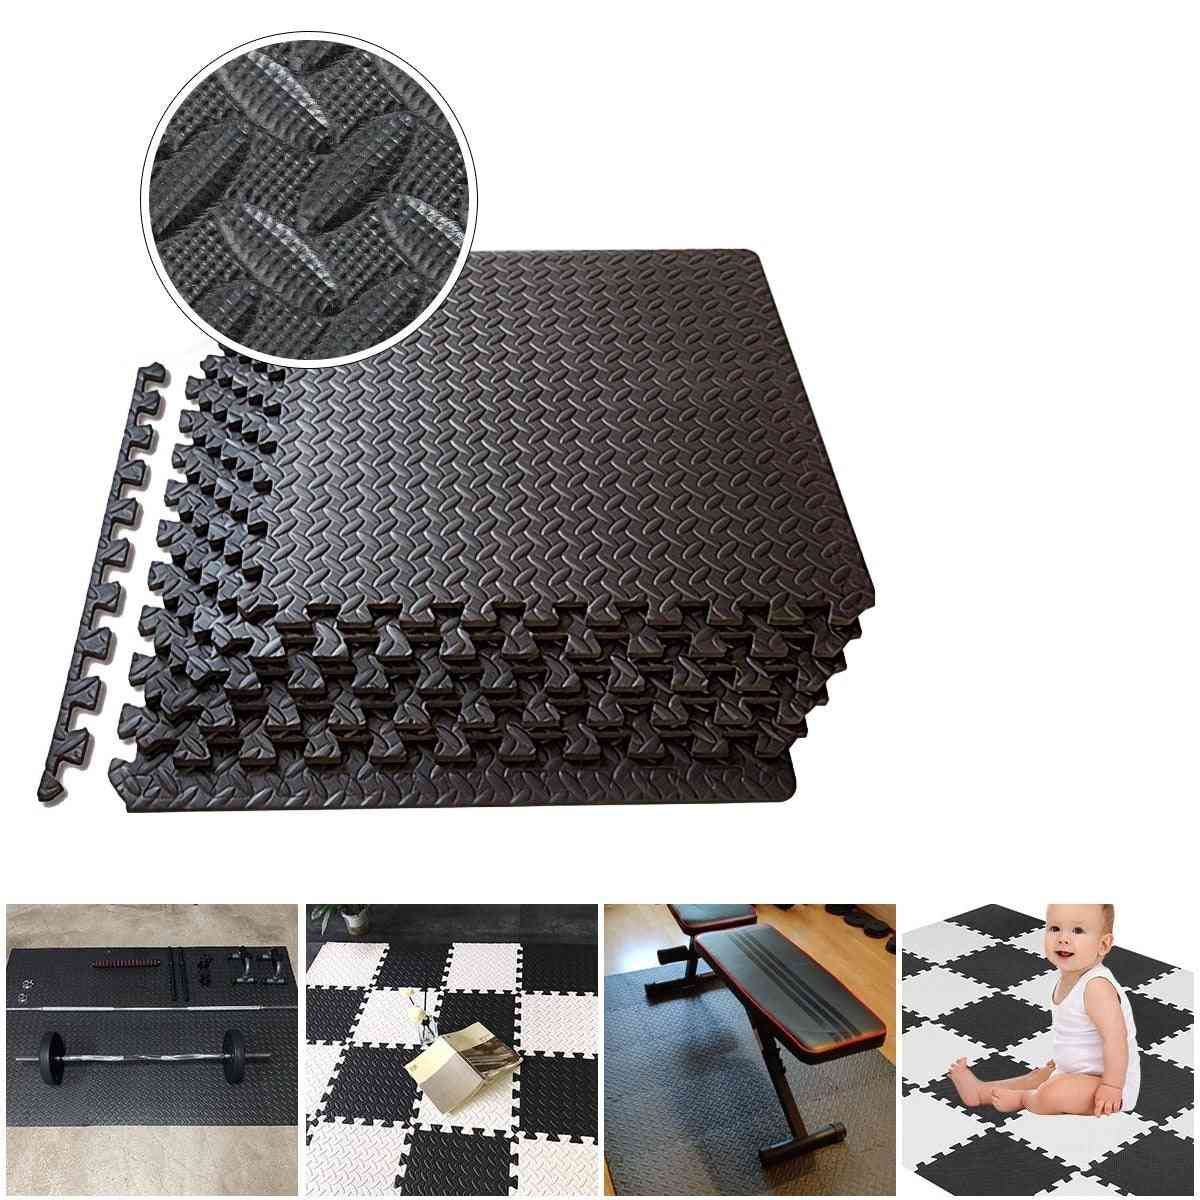 Interlocking Tiles Protective Flooring Eva Foam Mats